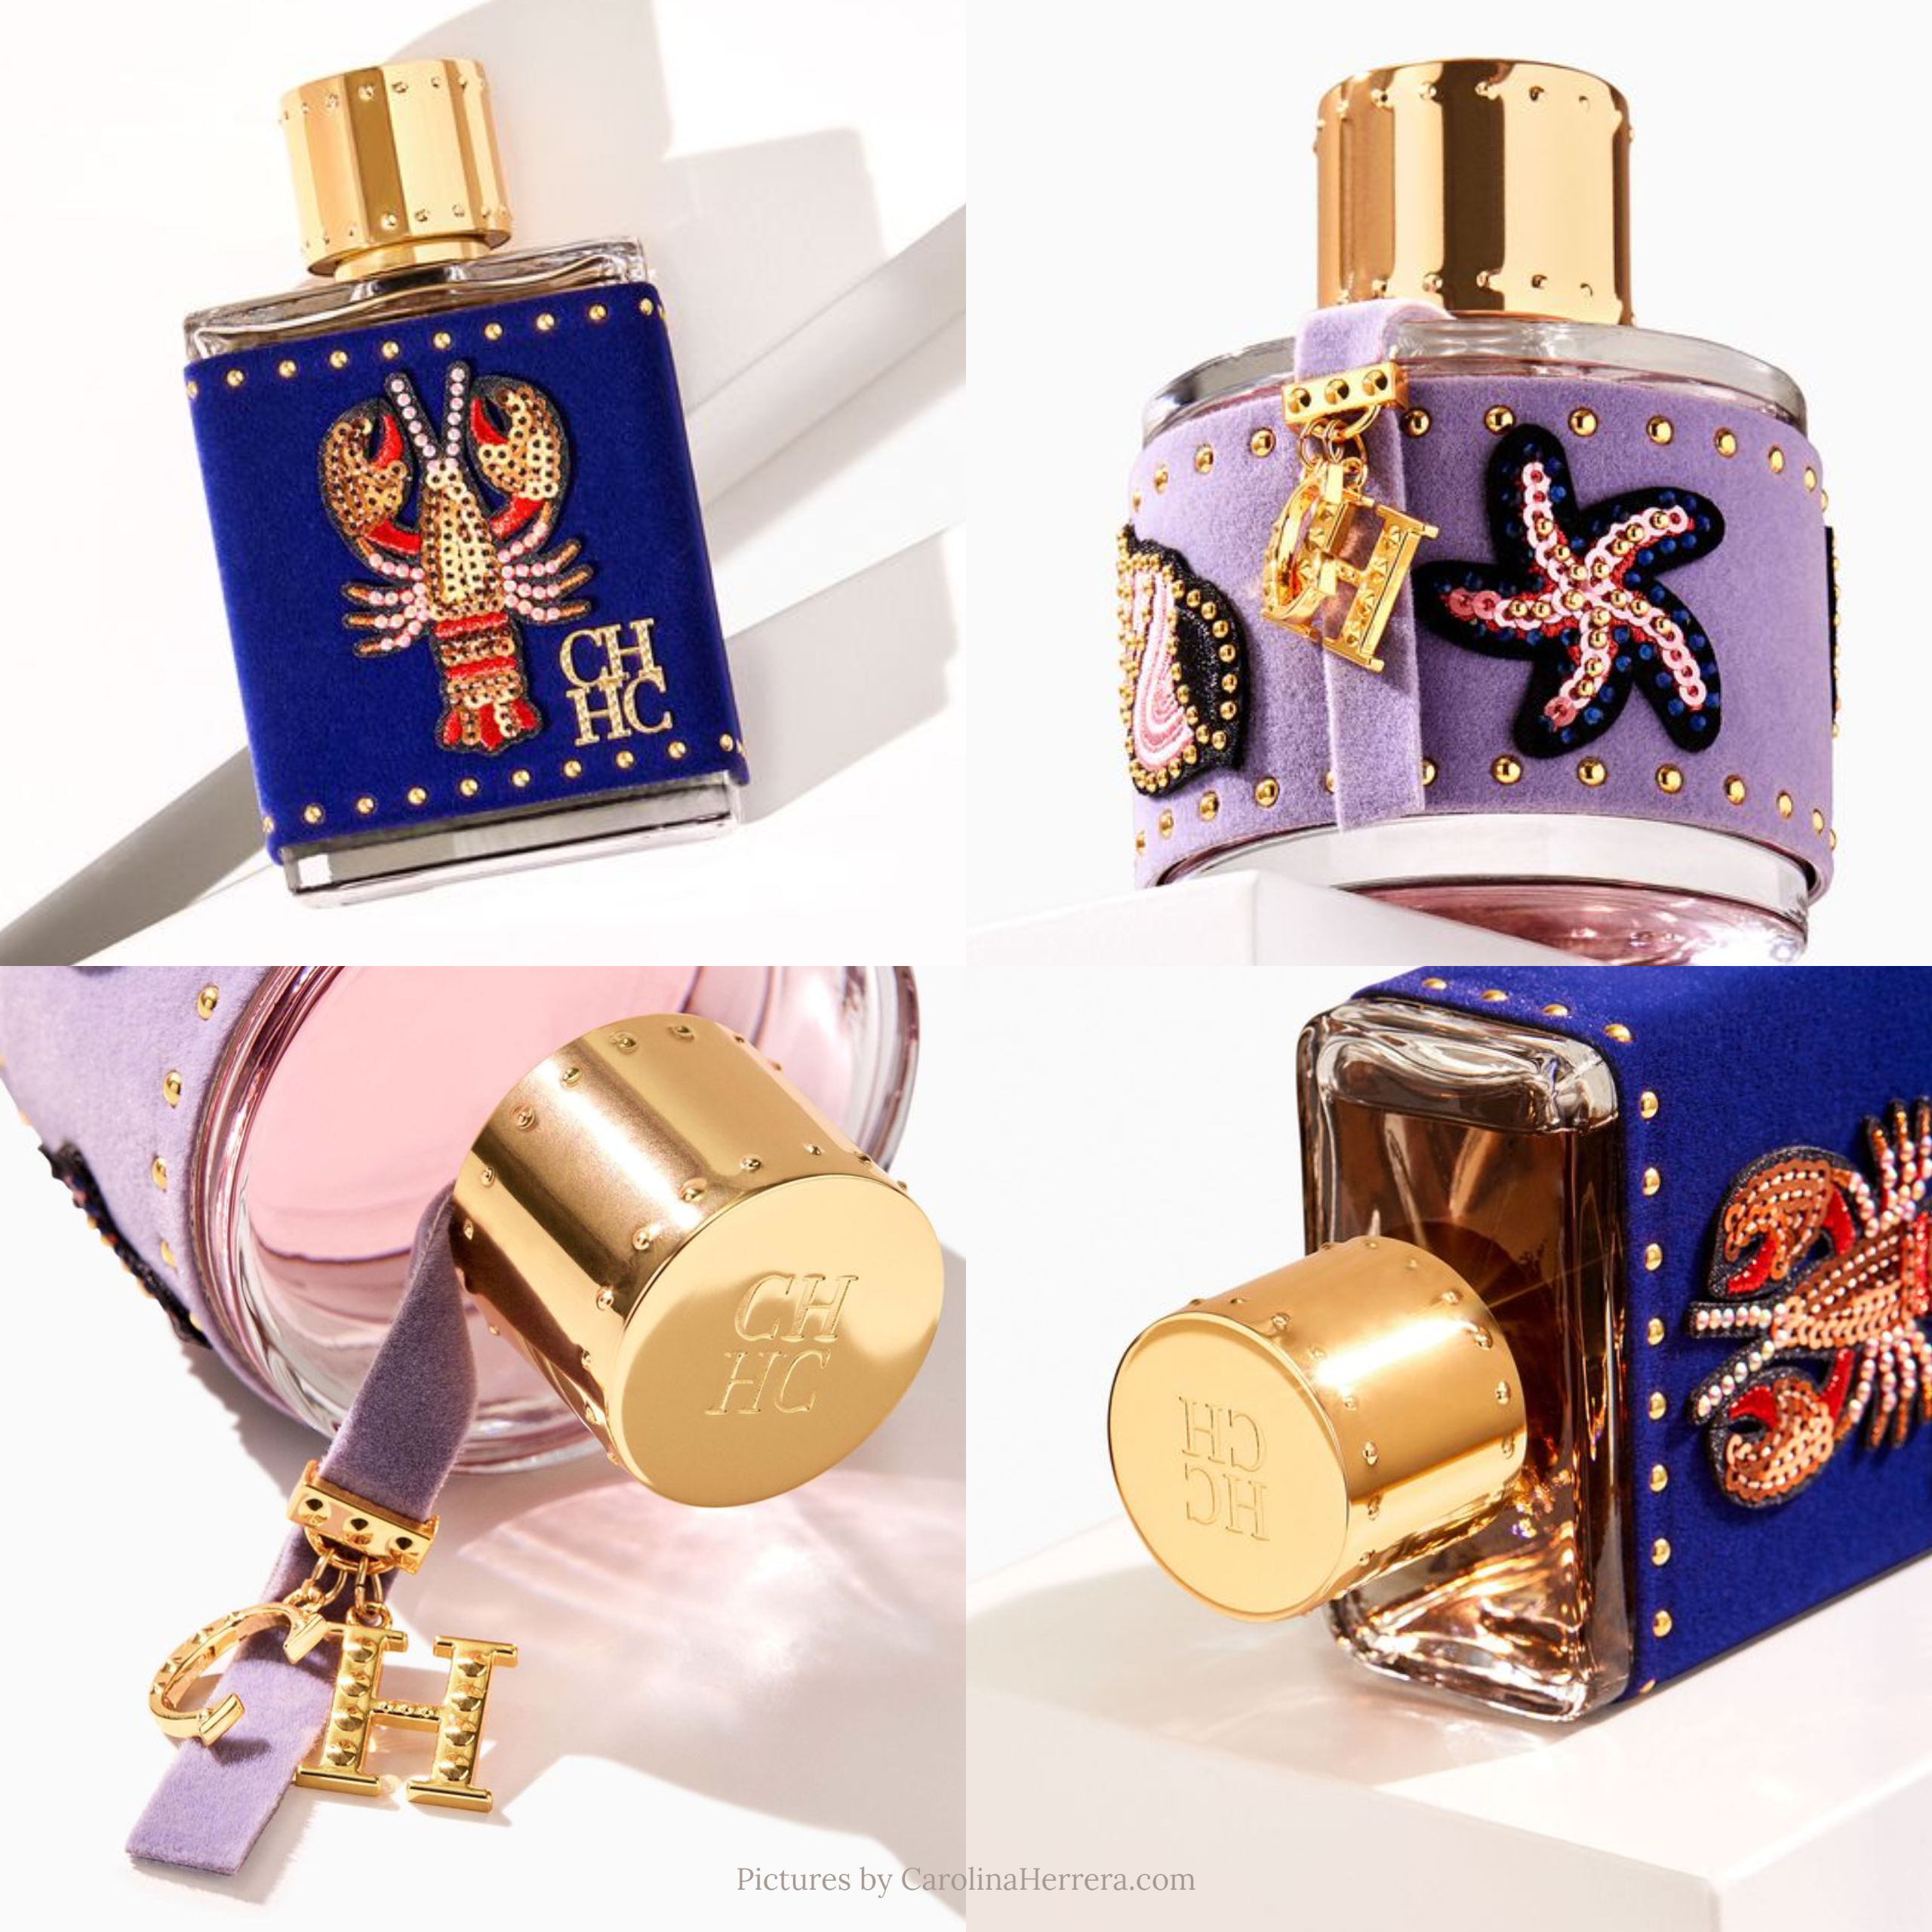 Carolina Herrera extends 212 parfum line with Extra range